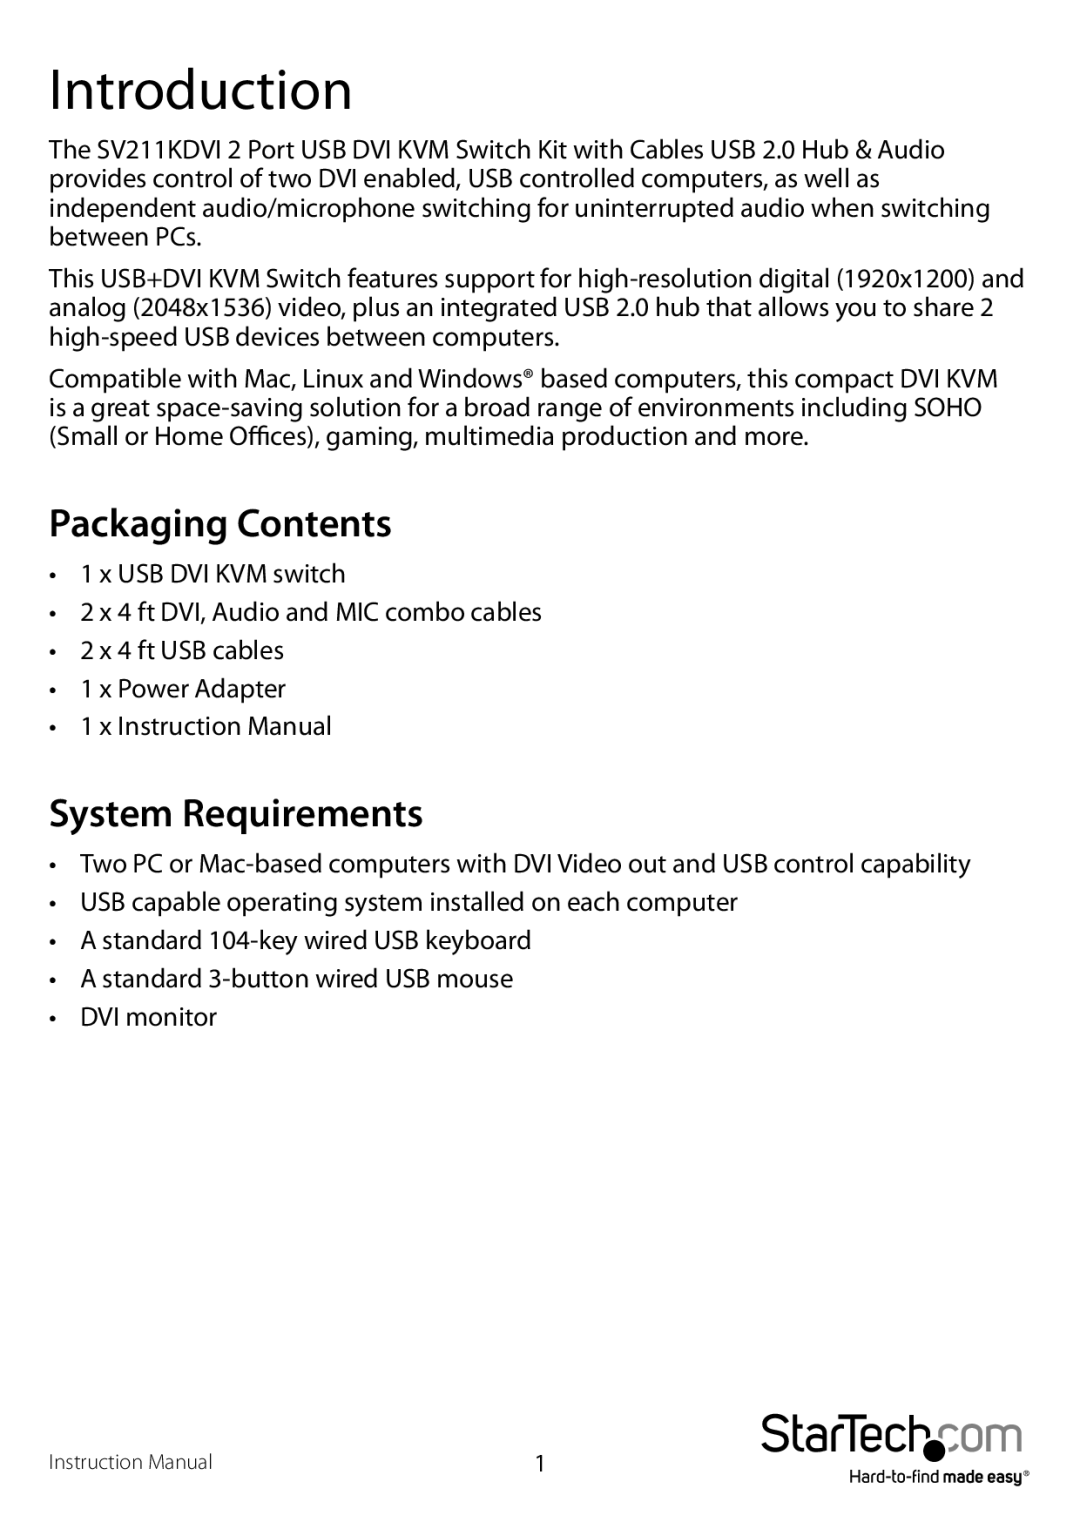 StarTech.com SV211KDVIEU, SV211KDVIGB manual Introduction, Packaging Contents, System Requirements 